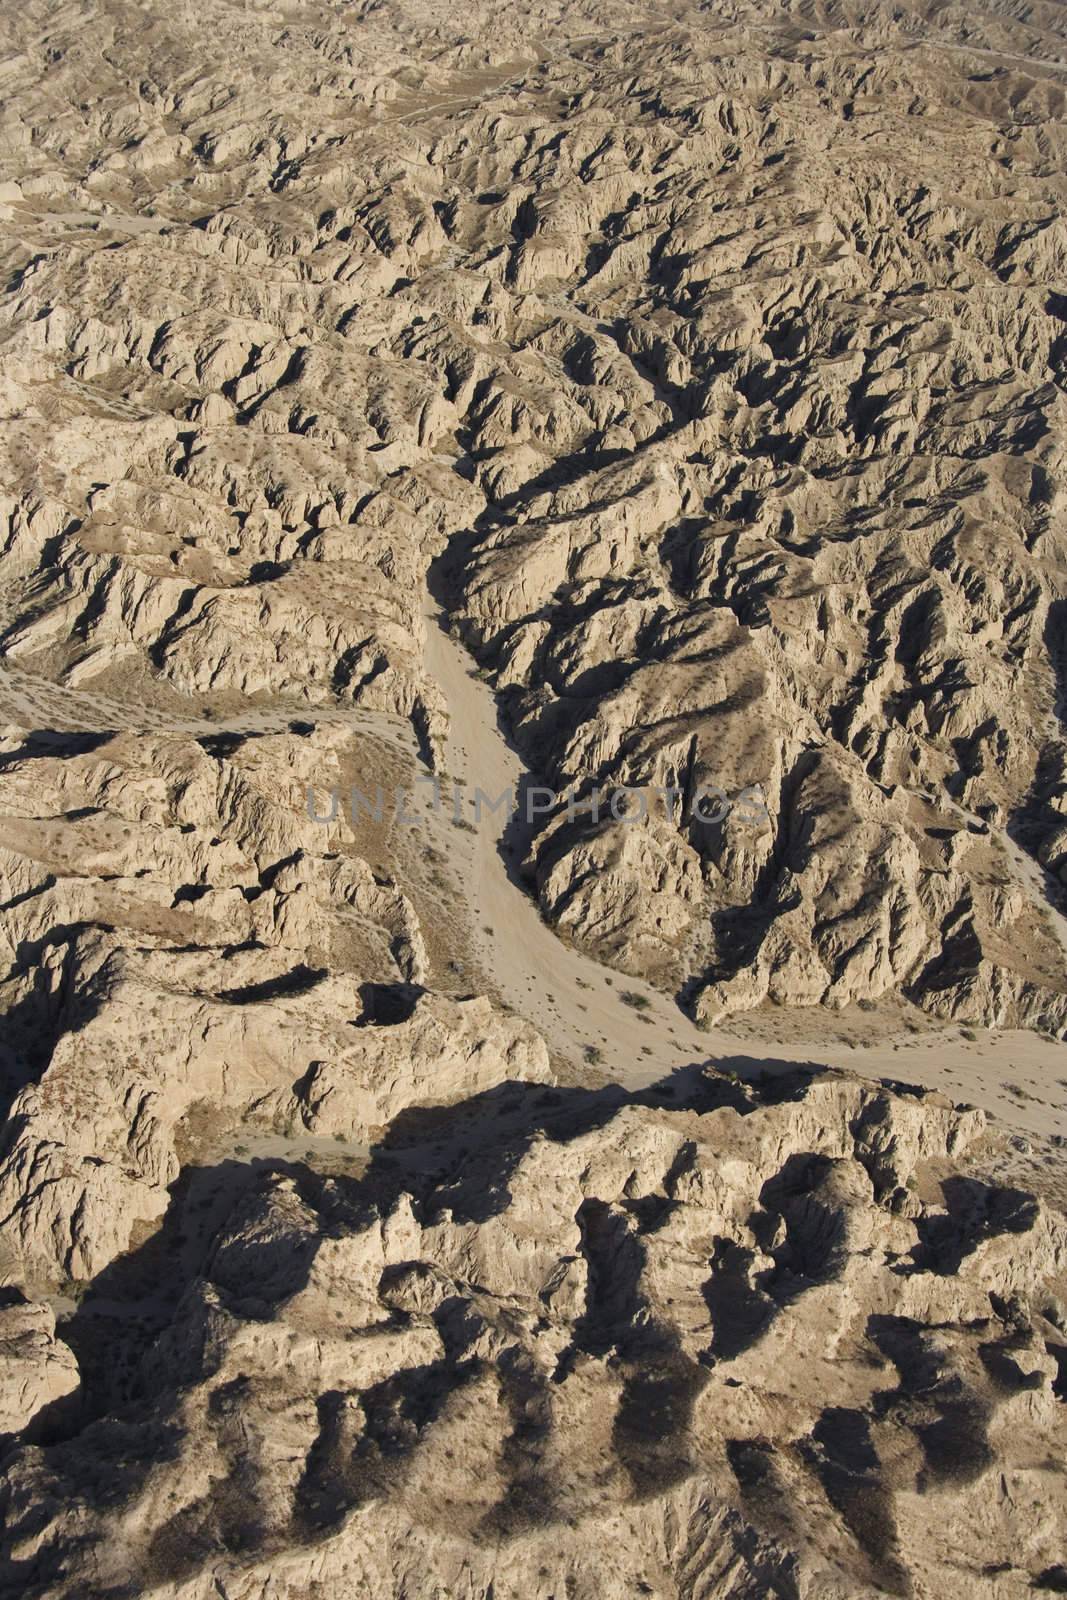 Aerial view of mountainous terrain in southwest.